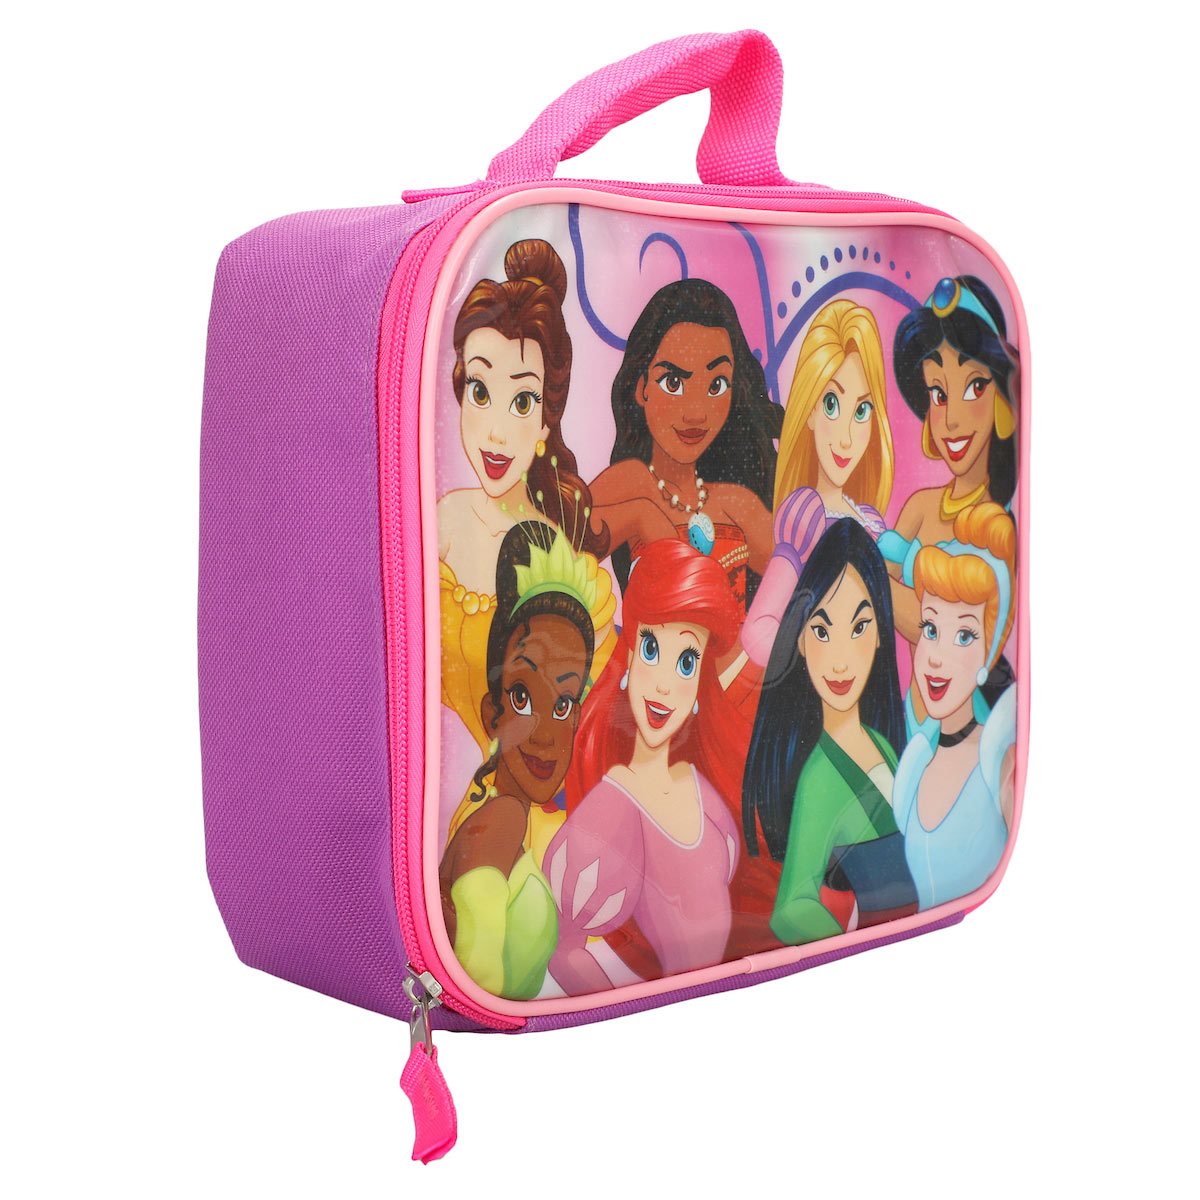 Disney Princesses Lunch Box - Entertainment Earth